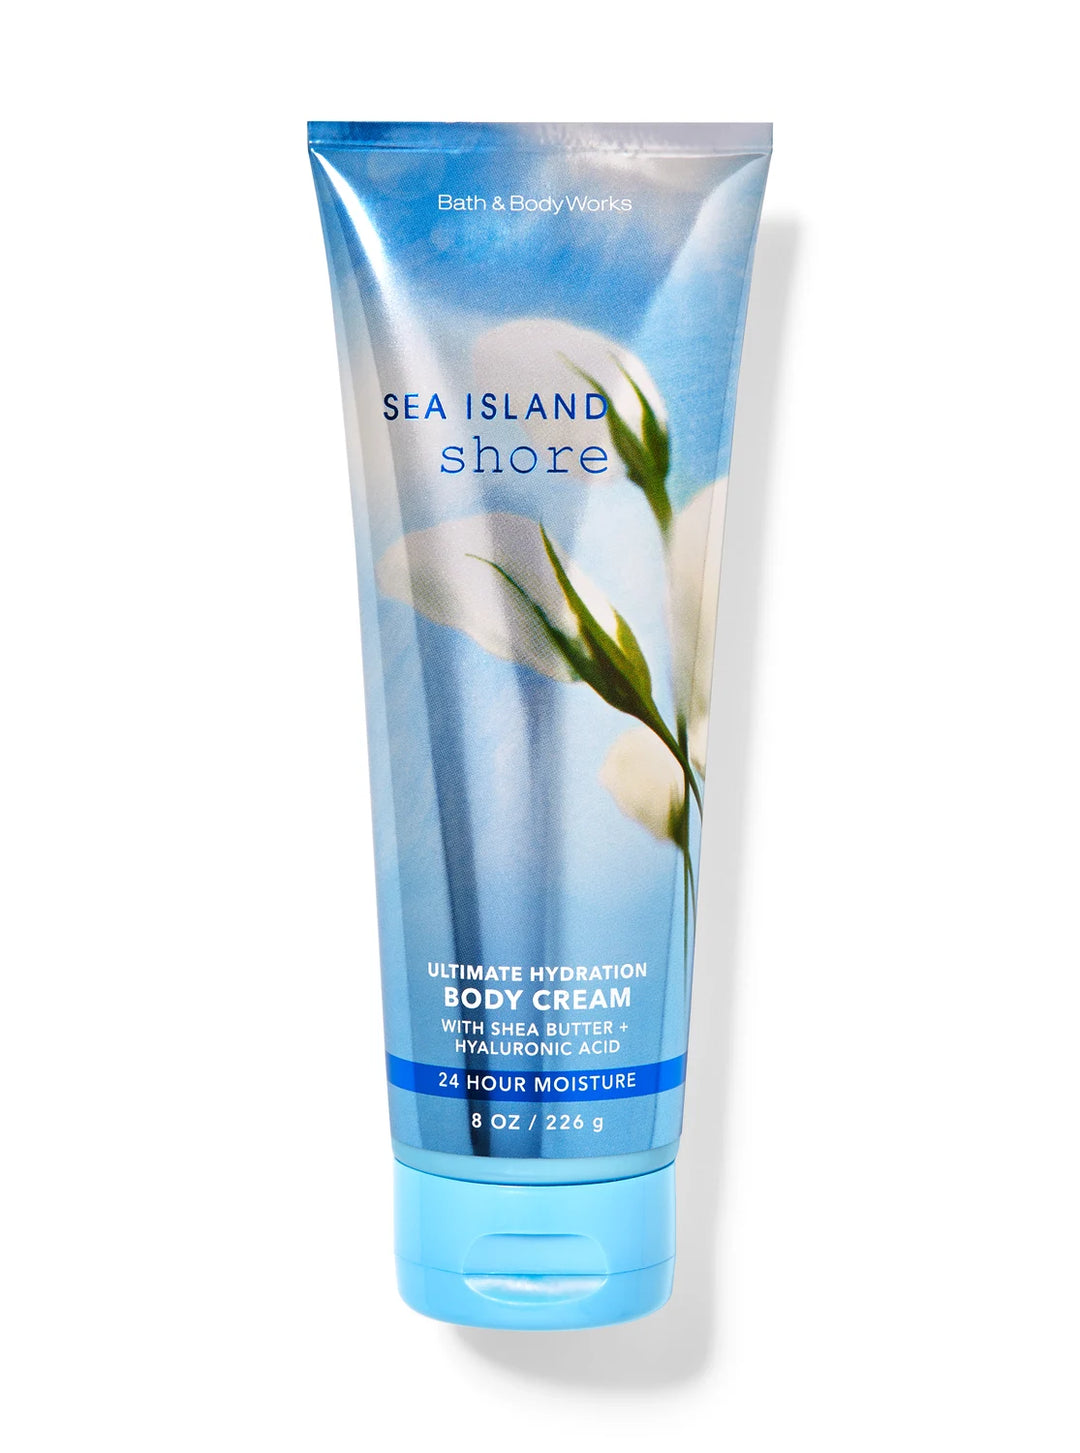 Bath & Body works Sea Island Shore Ultimate Hydration Body Cream